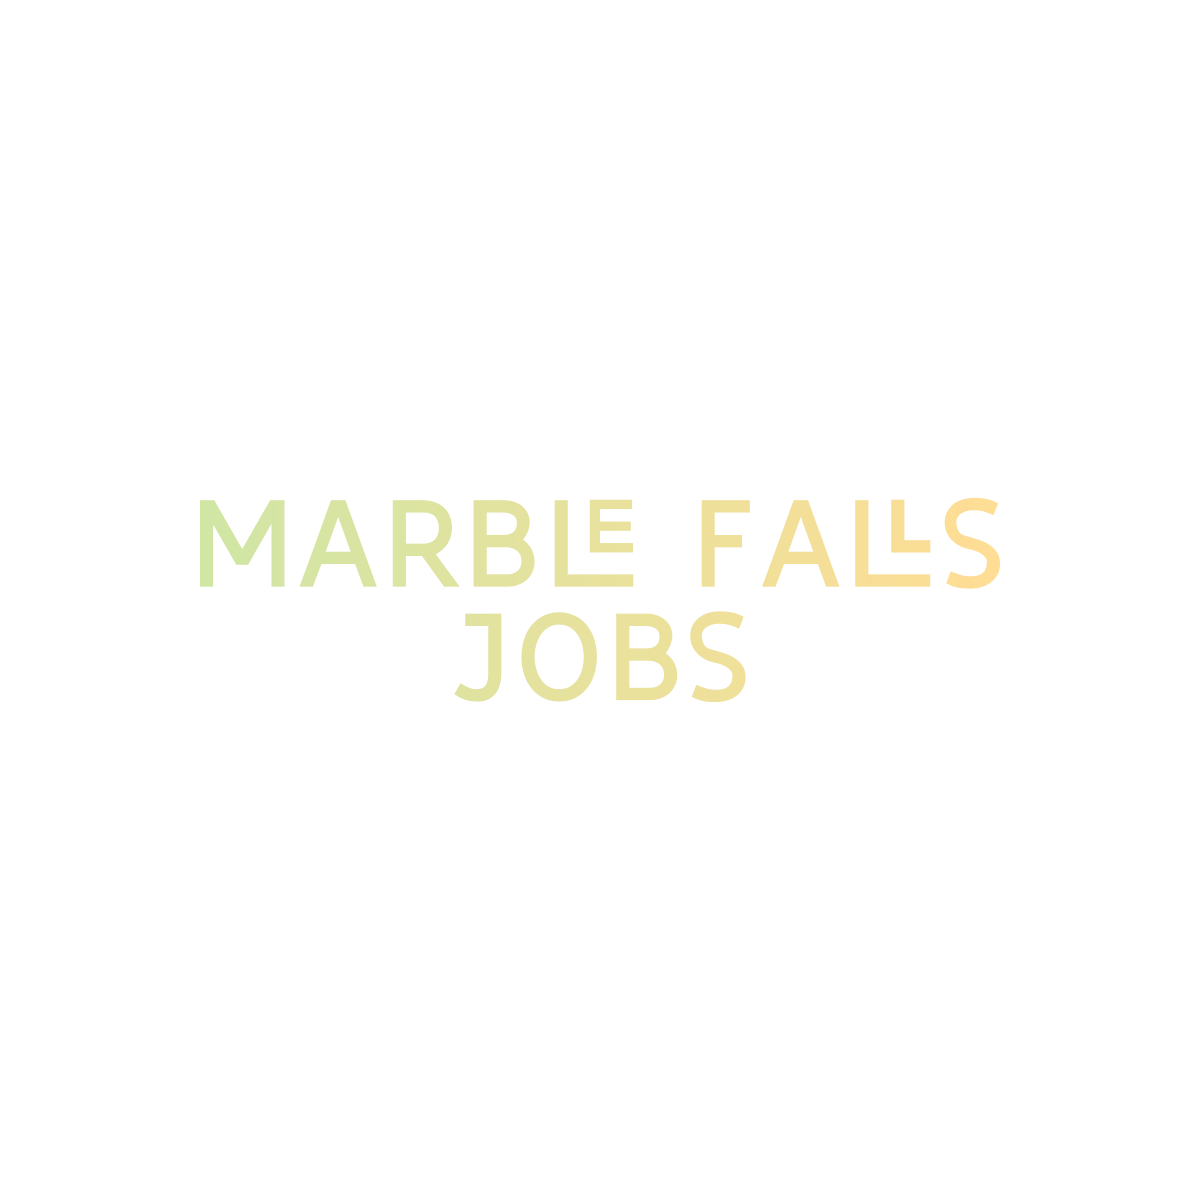 Marble Falls Jobs